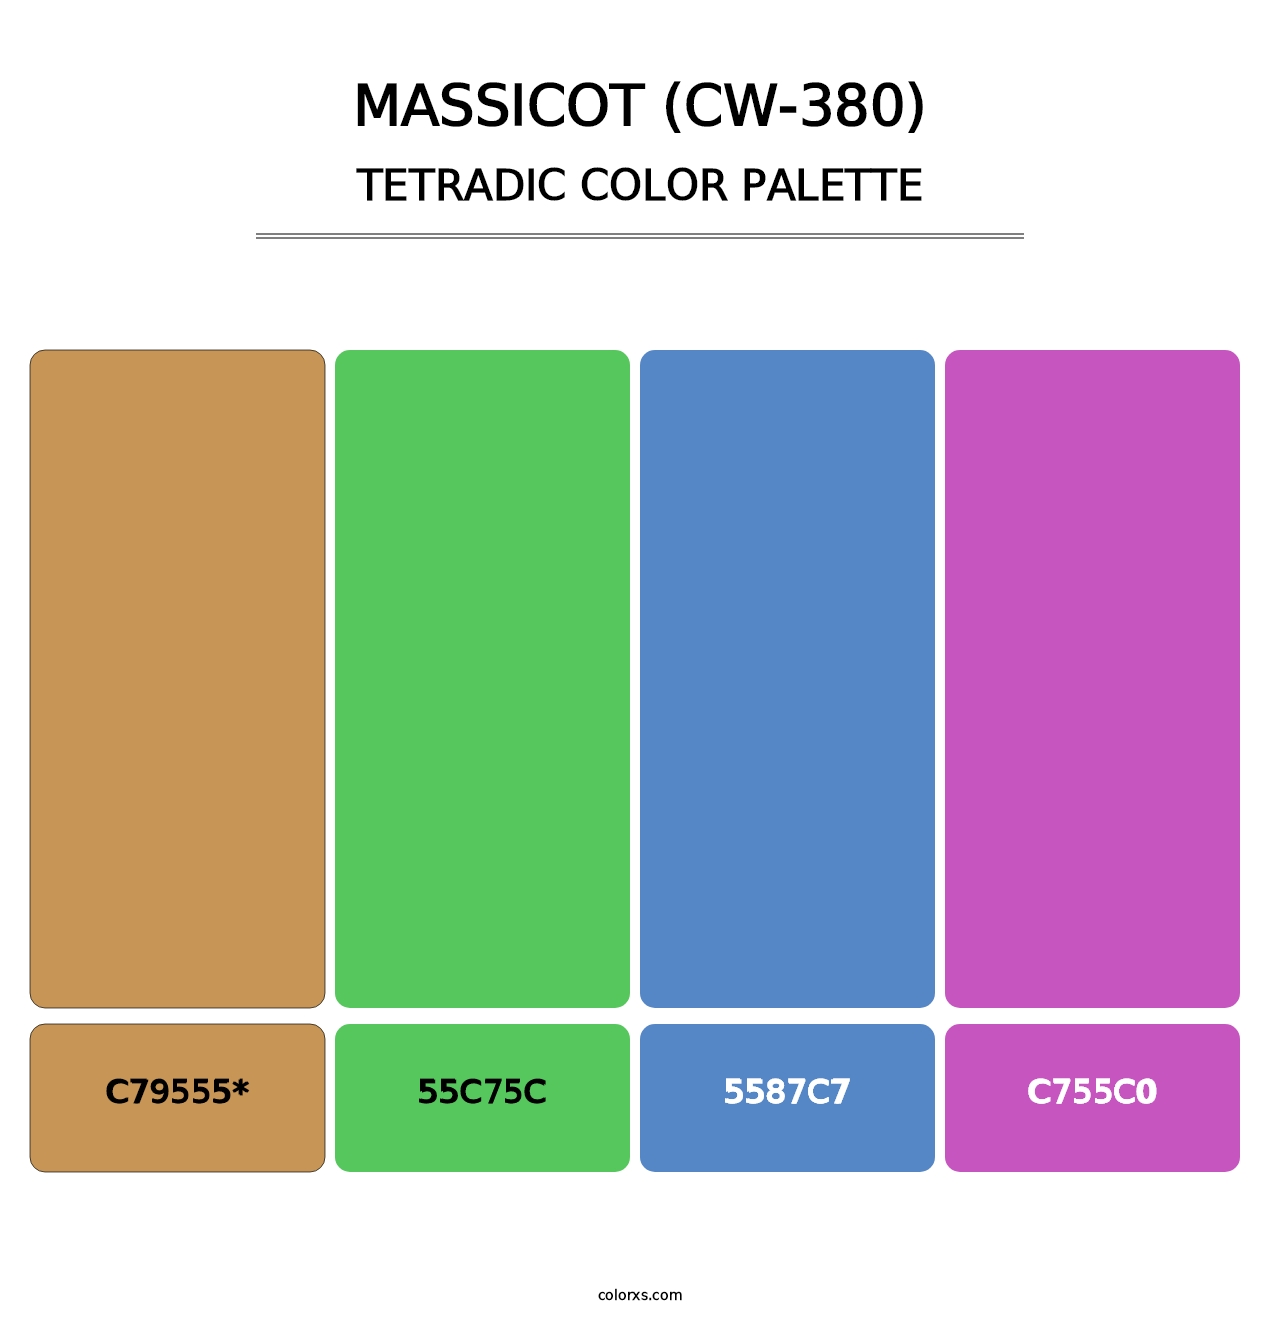 Massicot (CW-380) - Tetradic Color Palette